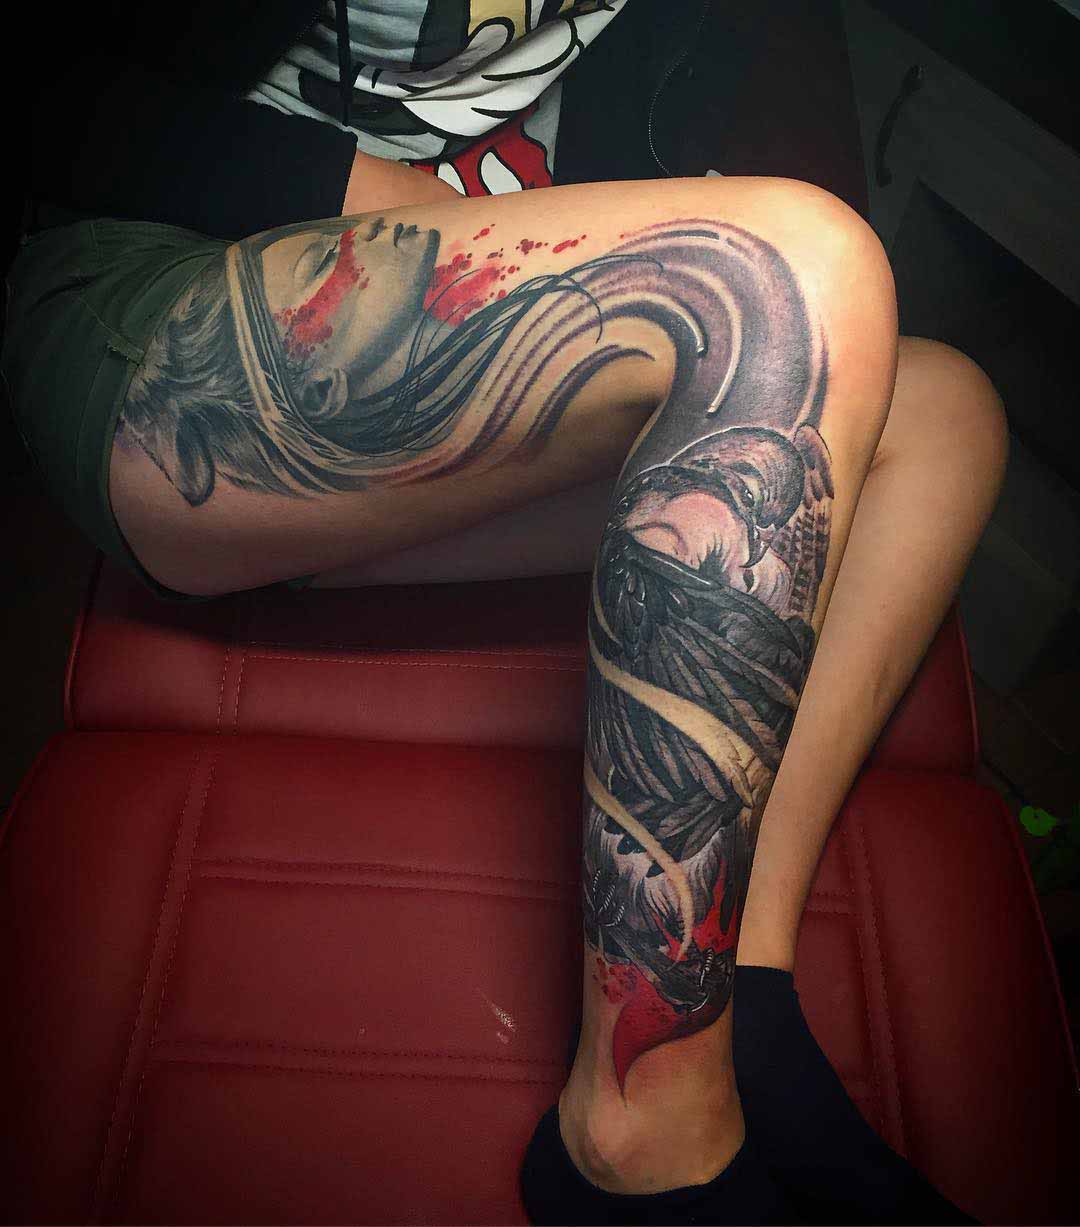 butterfly leg tattoo by tattoosuzette on DeviantArt